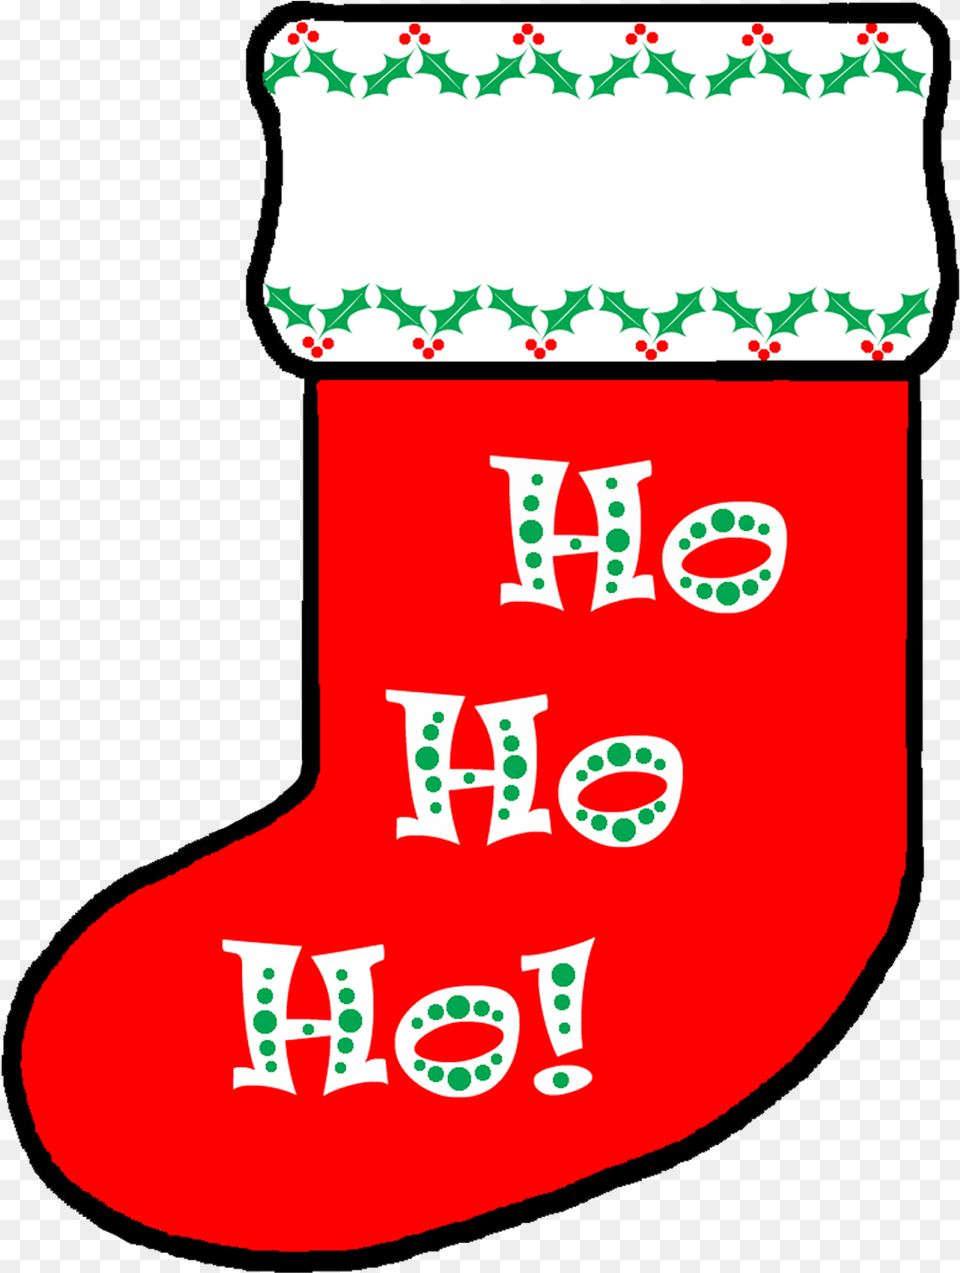 Xmas Wreath Vector Turkey Socks Snowman Shopping Scene Santa Socks Clipart, Hosiery, Stocking, Clothing, Christmas Decorations Png Image